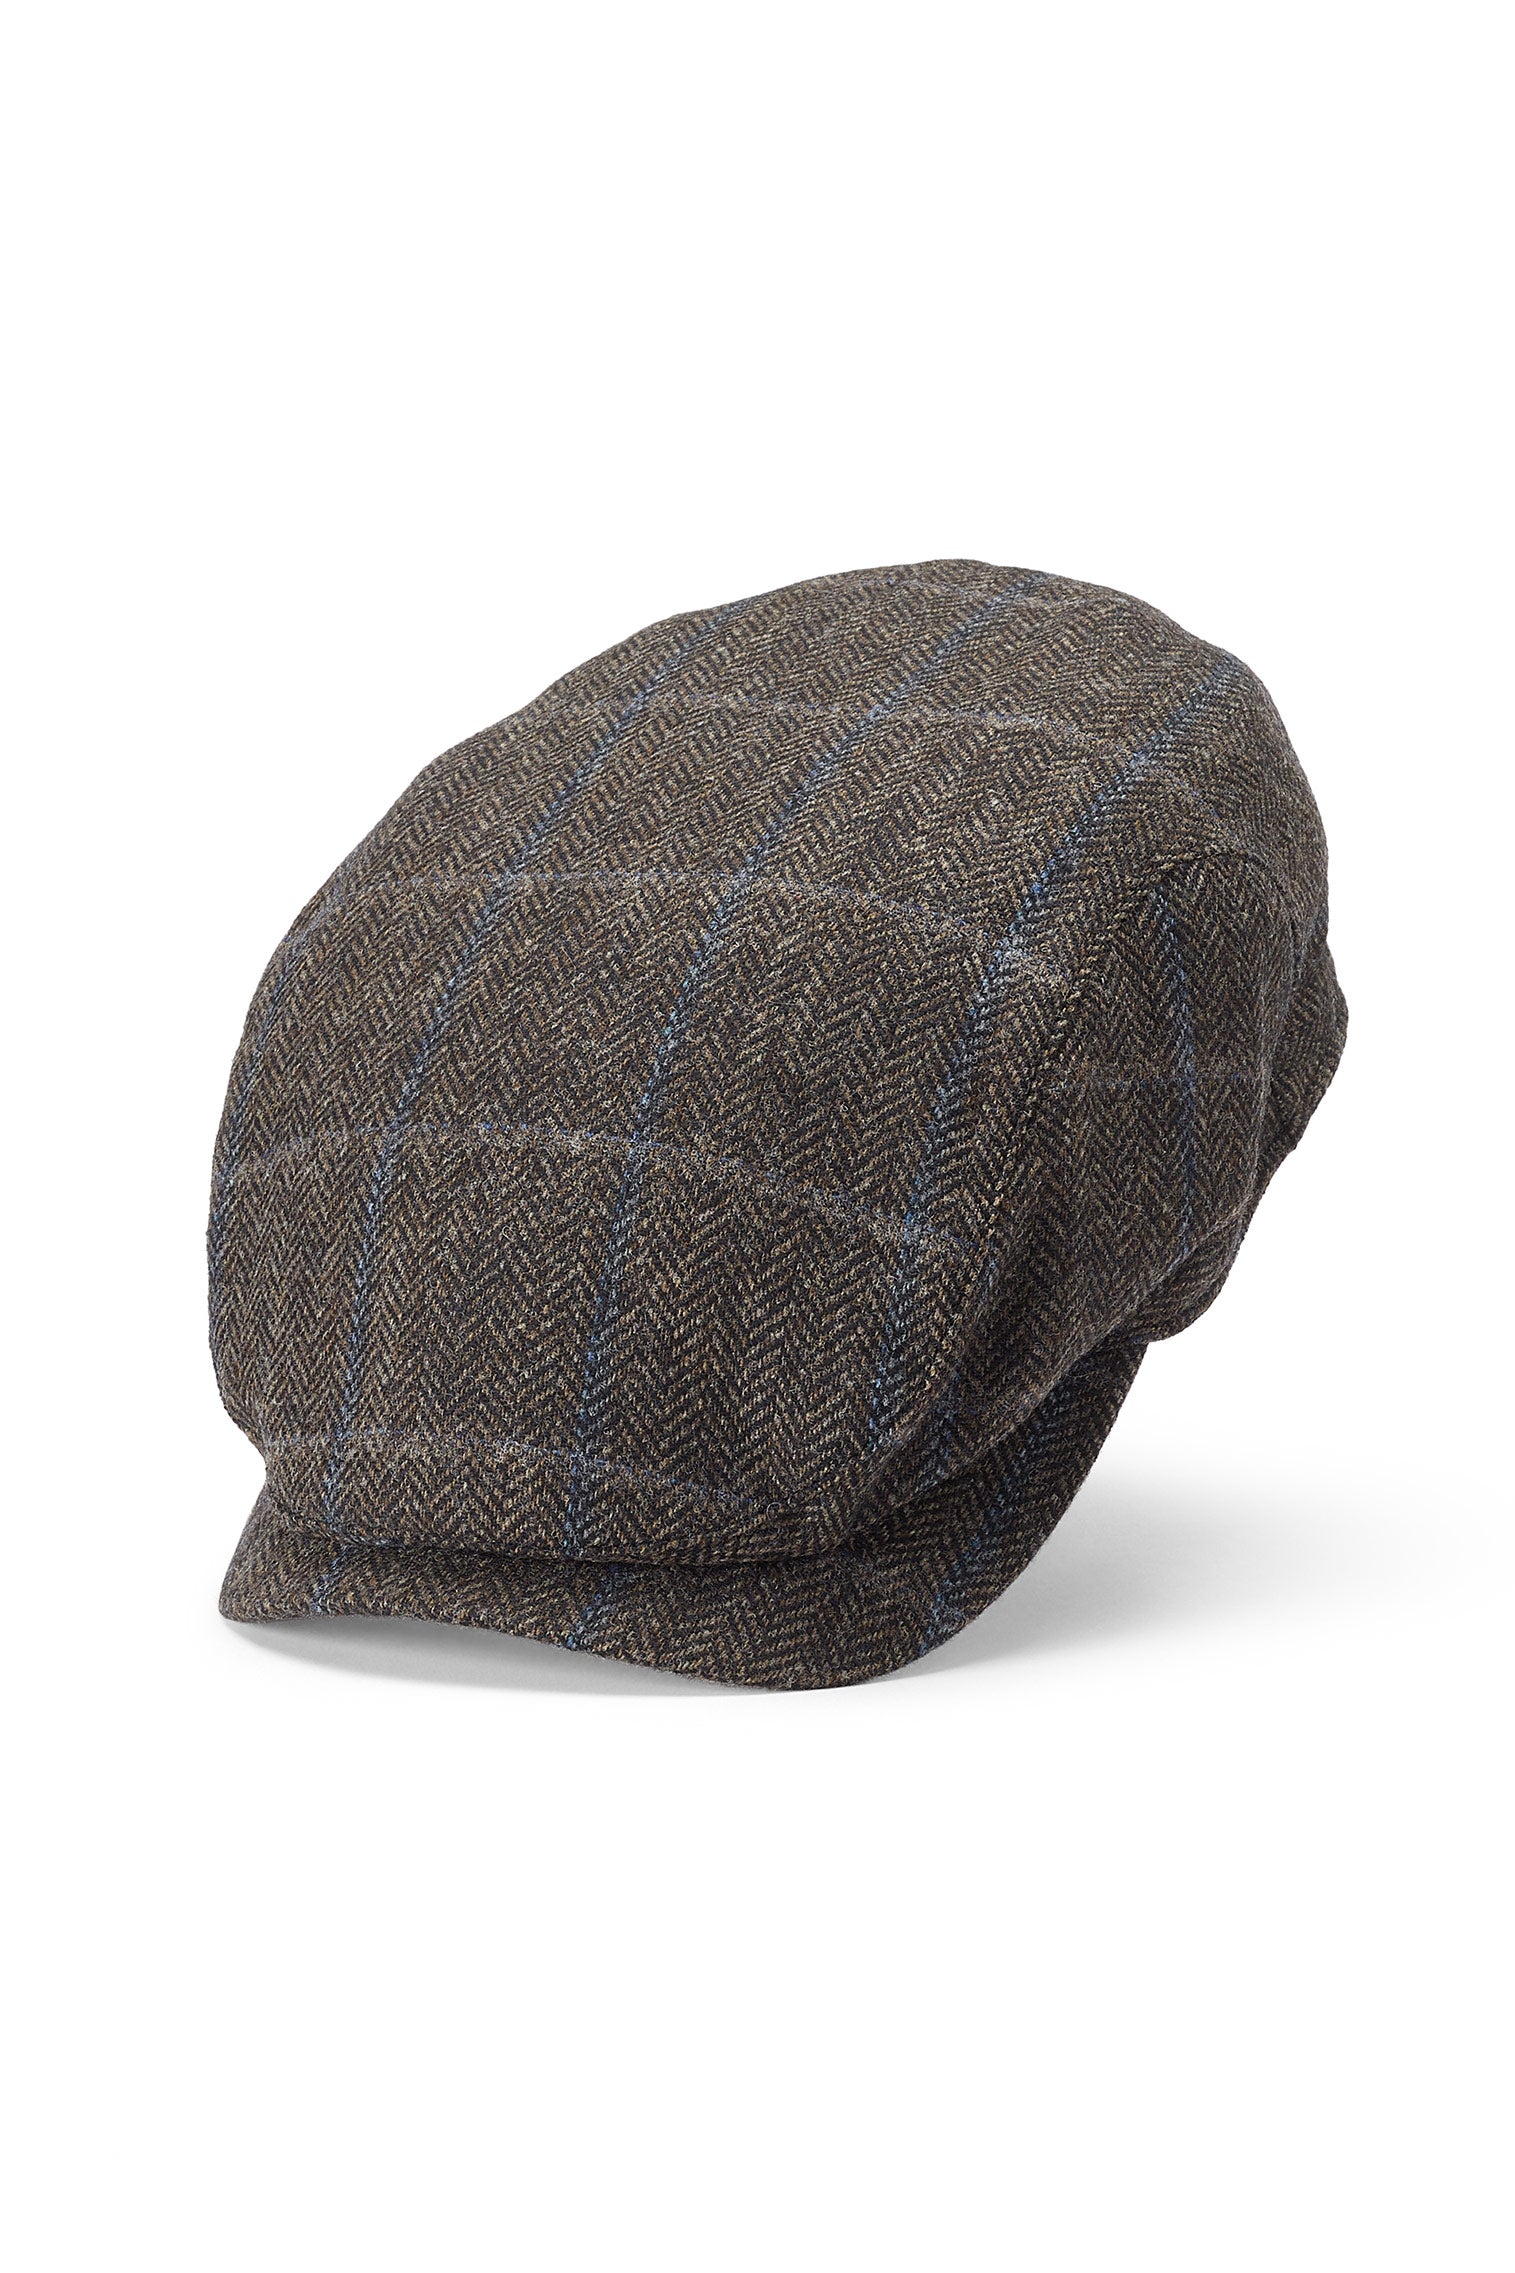 Lynton Brown Flat Cap - Hats for Tall People - Lock & Co. Hatters London UK